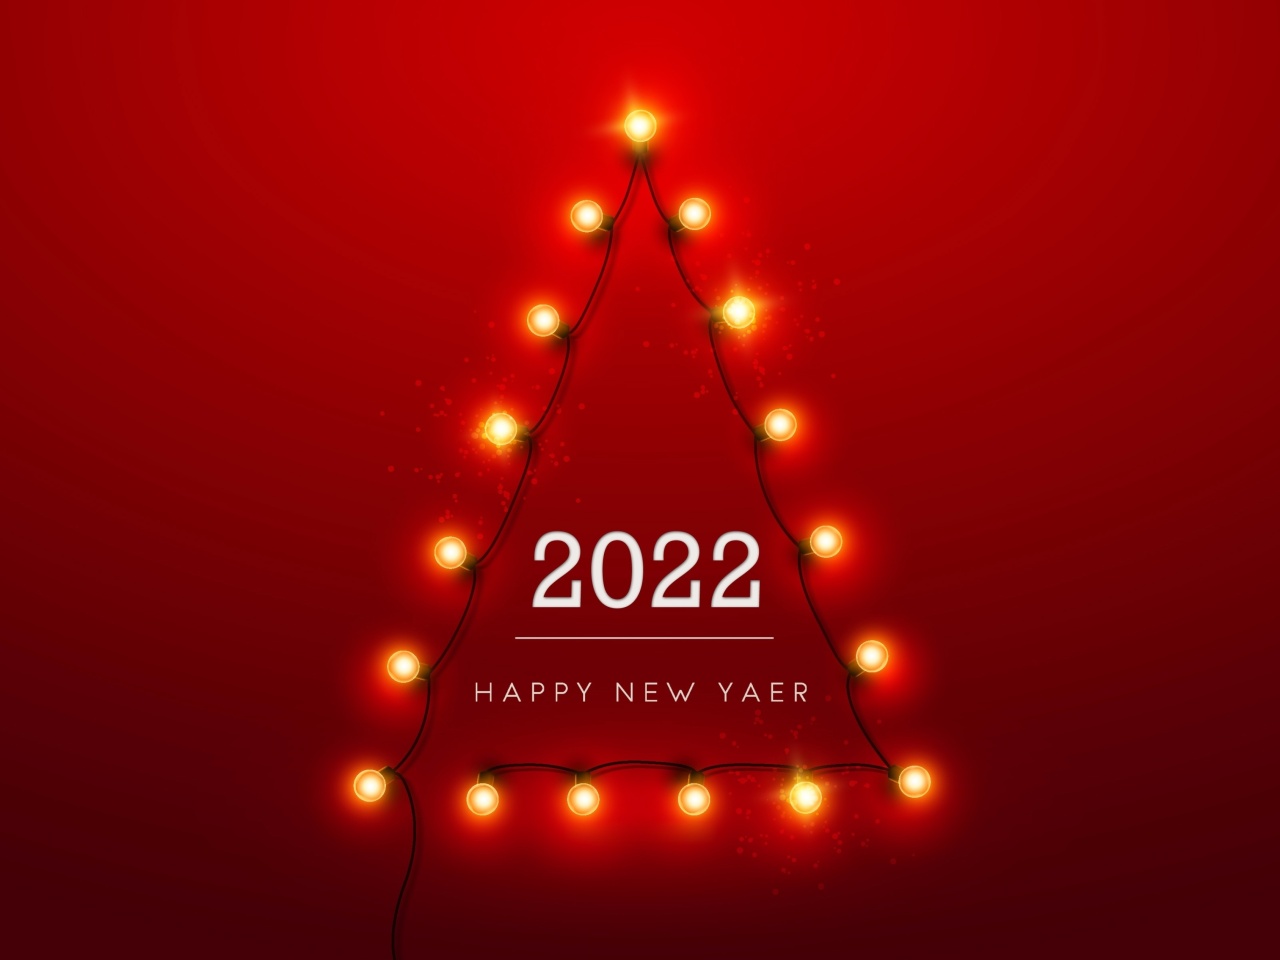 Happy New Year 2022 wallpaper 1280x960